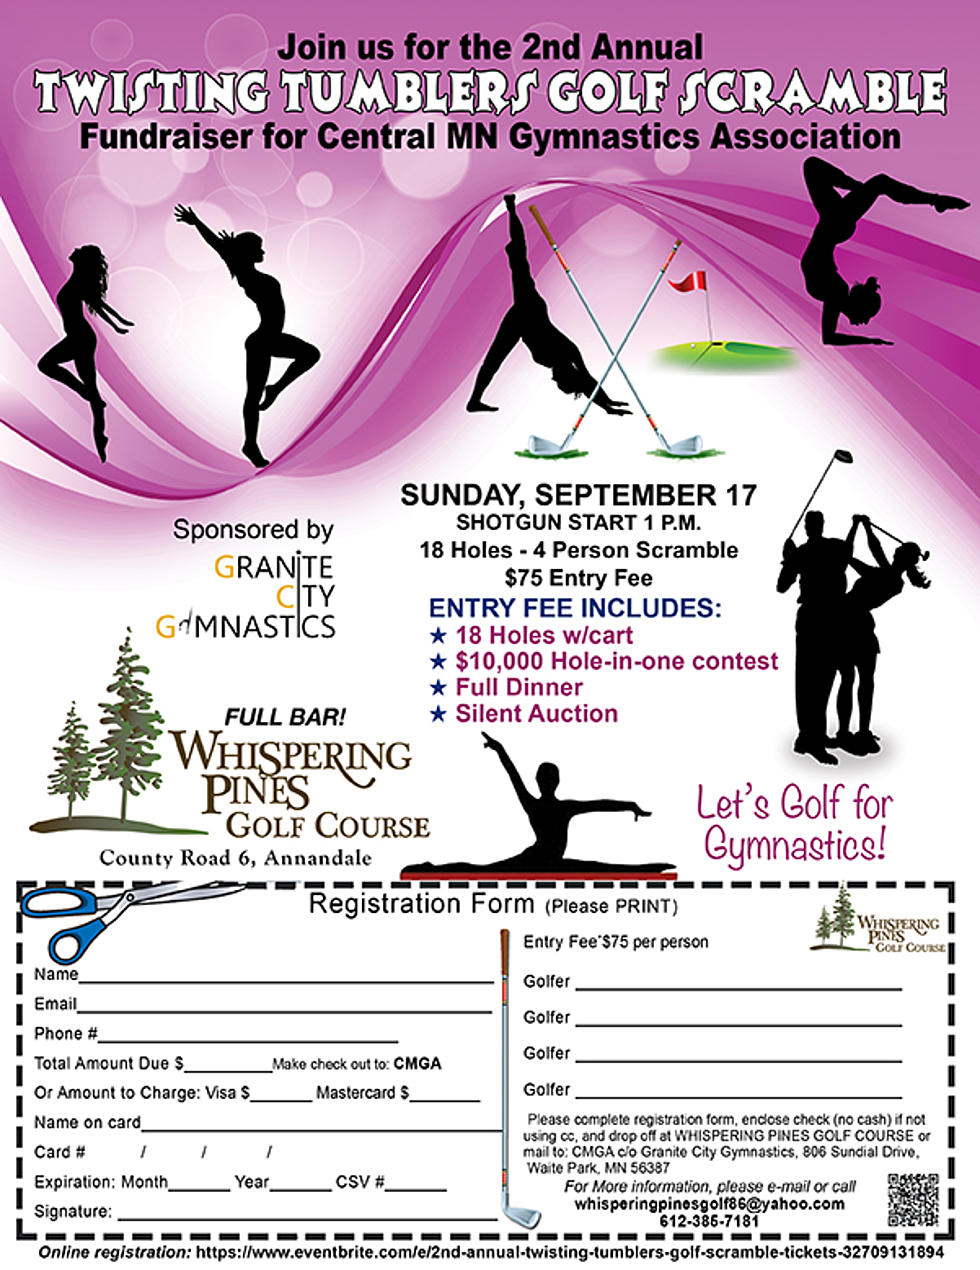 Golf for Central Minnesota Gymnastics Association on Sept. 17th!